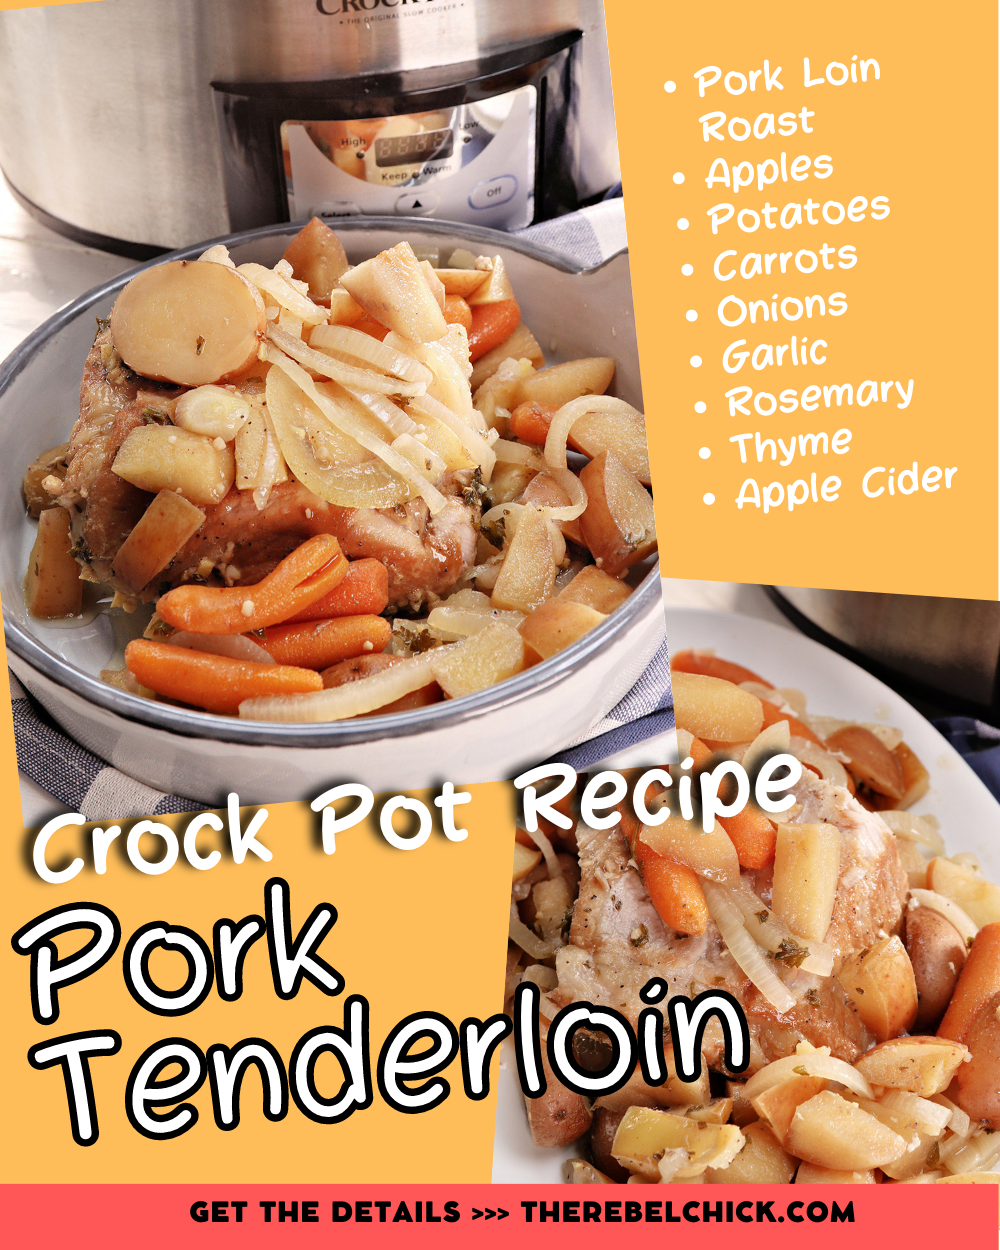 Crock Pot Pork Tenderloin with Apples - The Rebel Chick